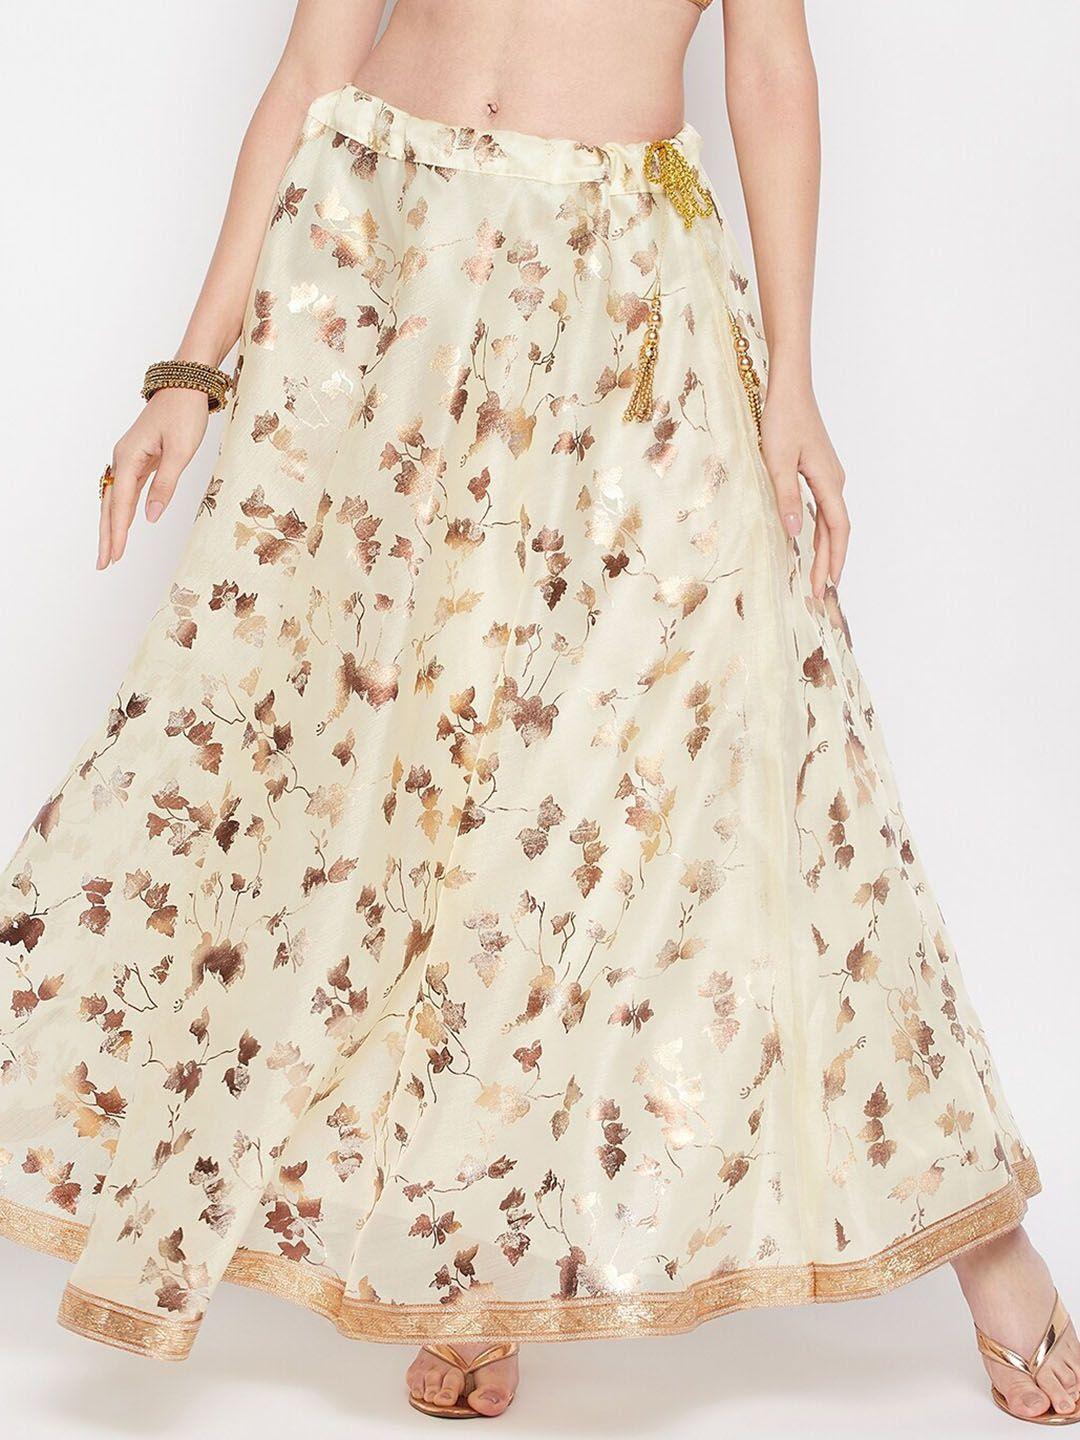 clora-creation-floral-foil-printed-organza-flared-maxi-skirt